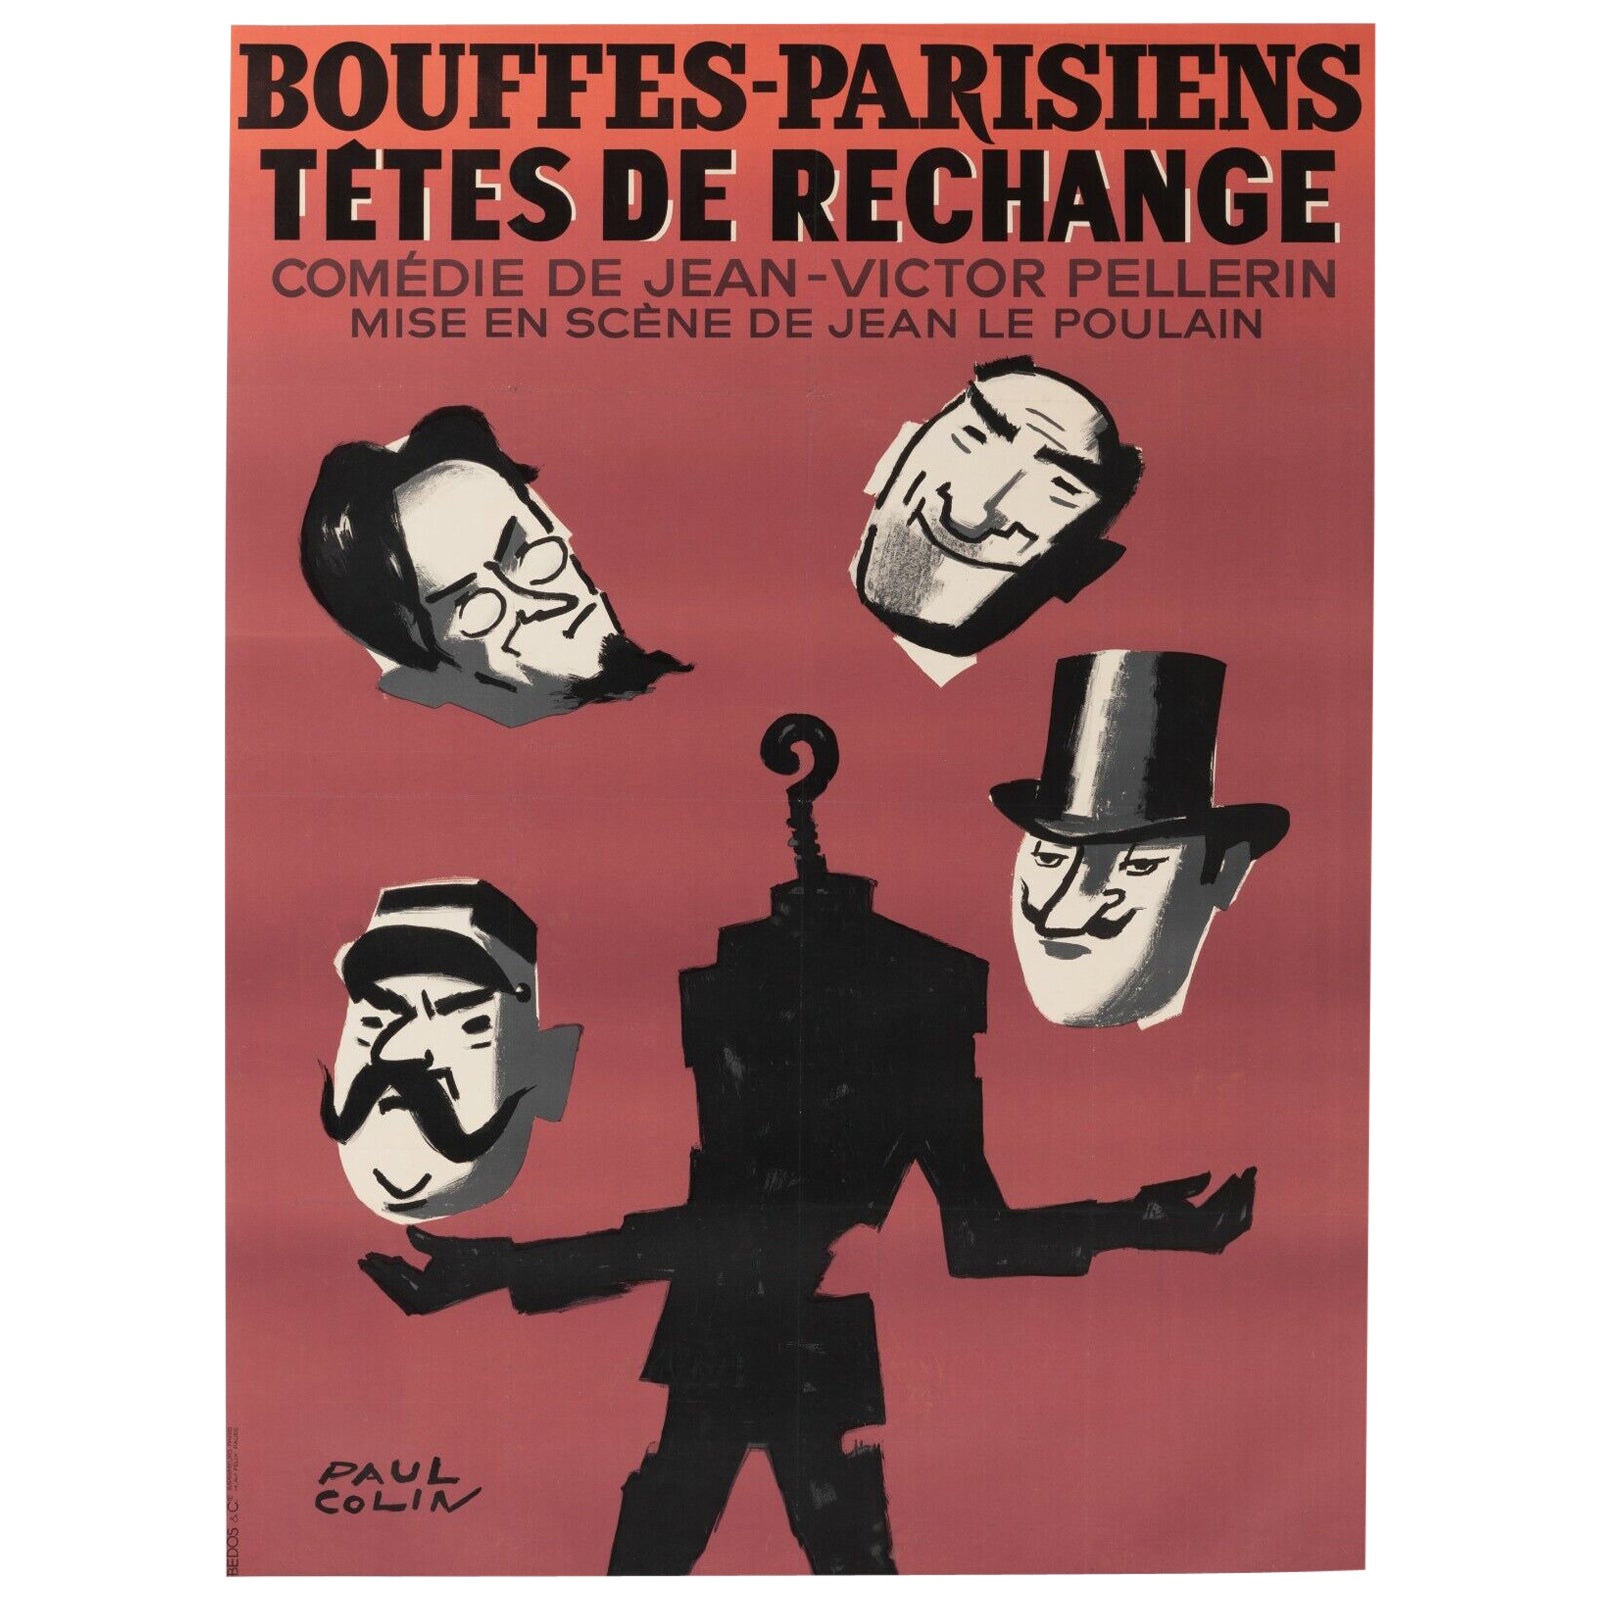 Original Poster-Paul Colin-Bouffes Parisiens-Music Hall-Opera, 1964 For Sale